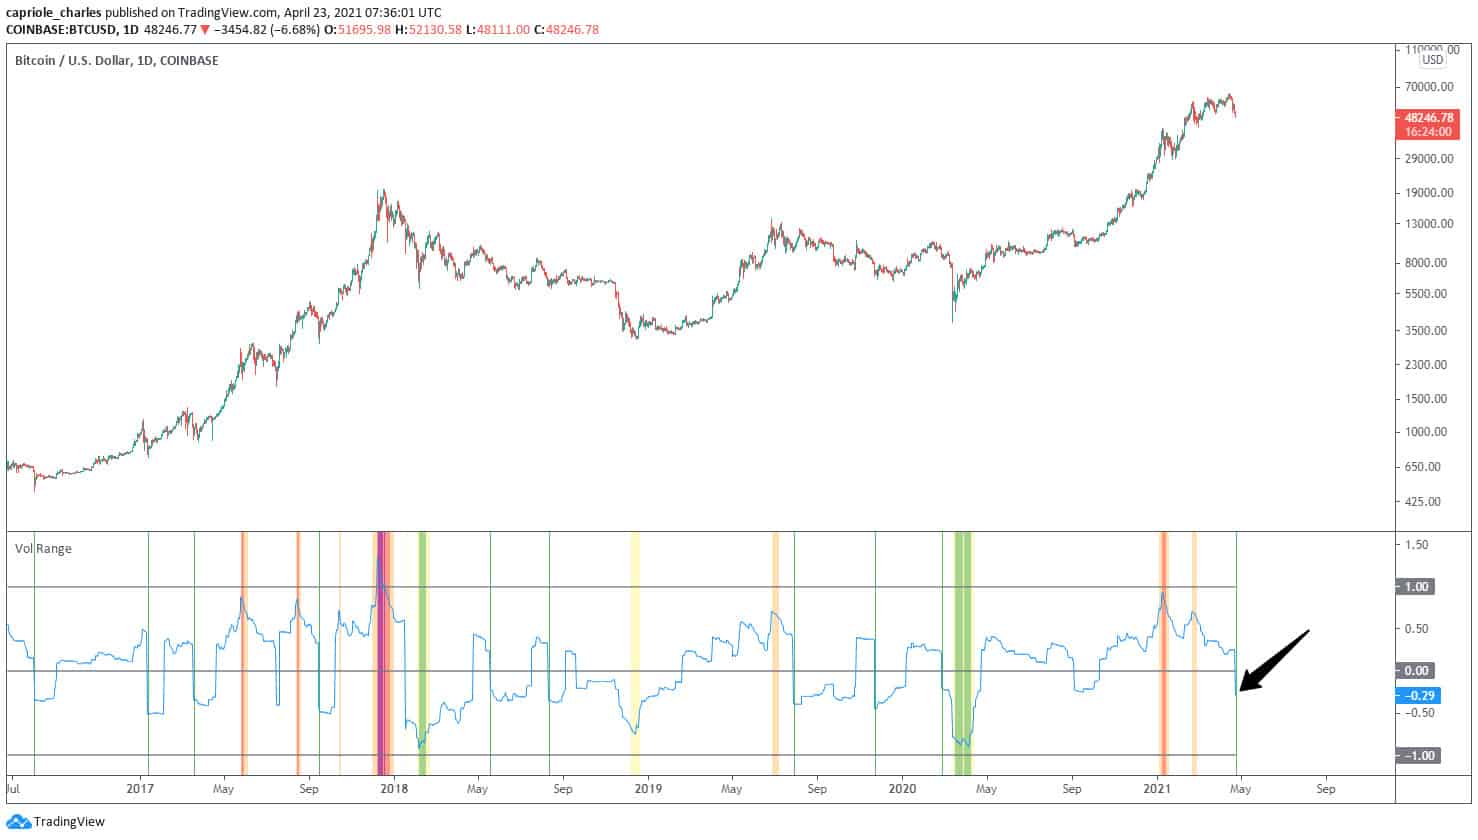 Bitcoin Price vs. Volatility Index. Source: Twitter